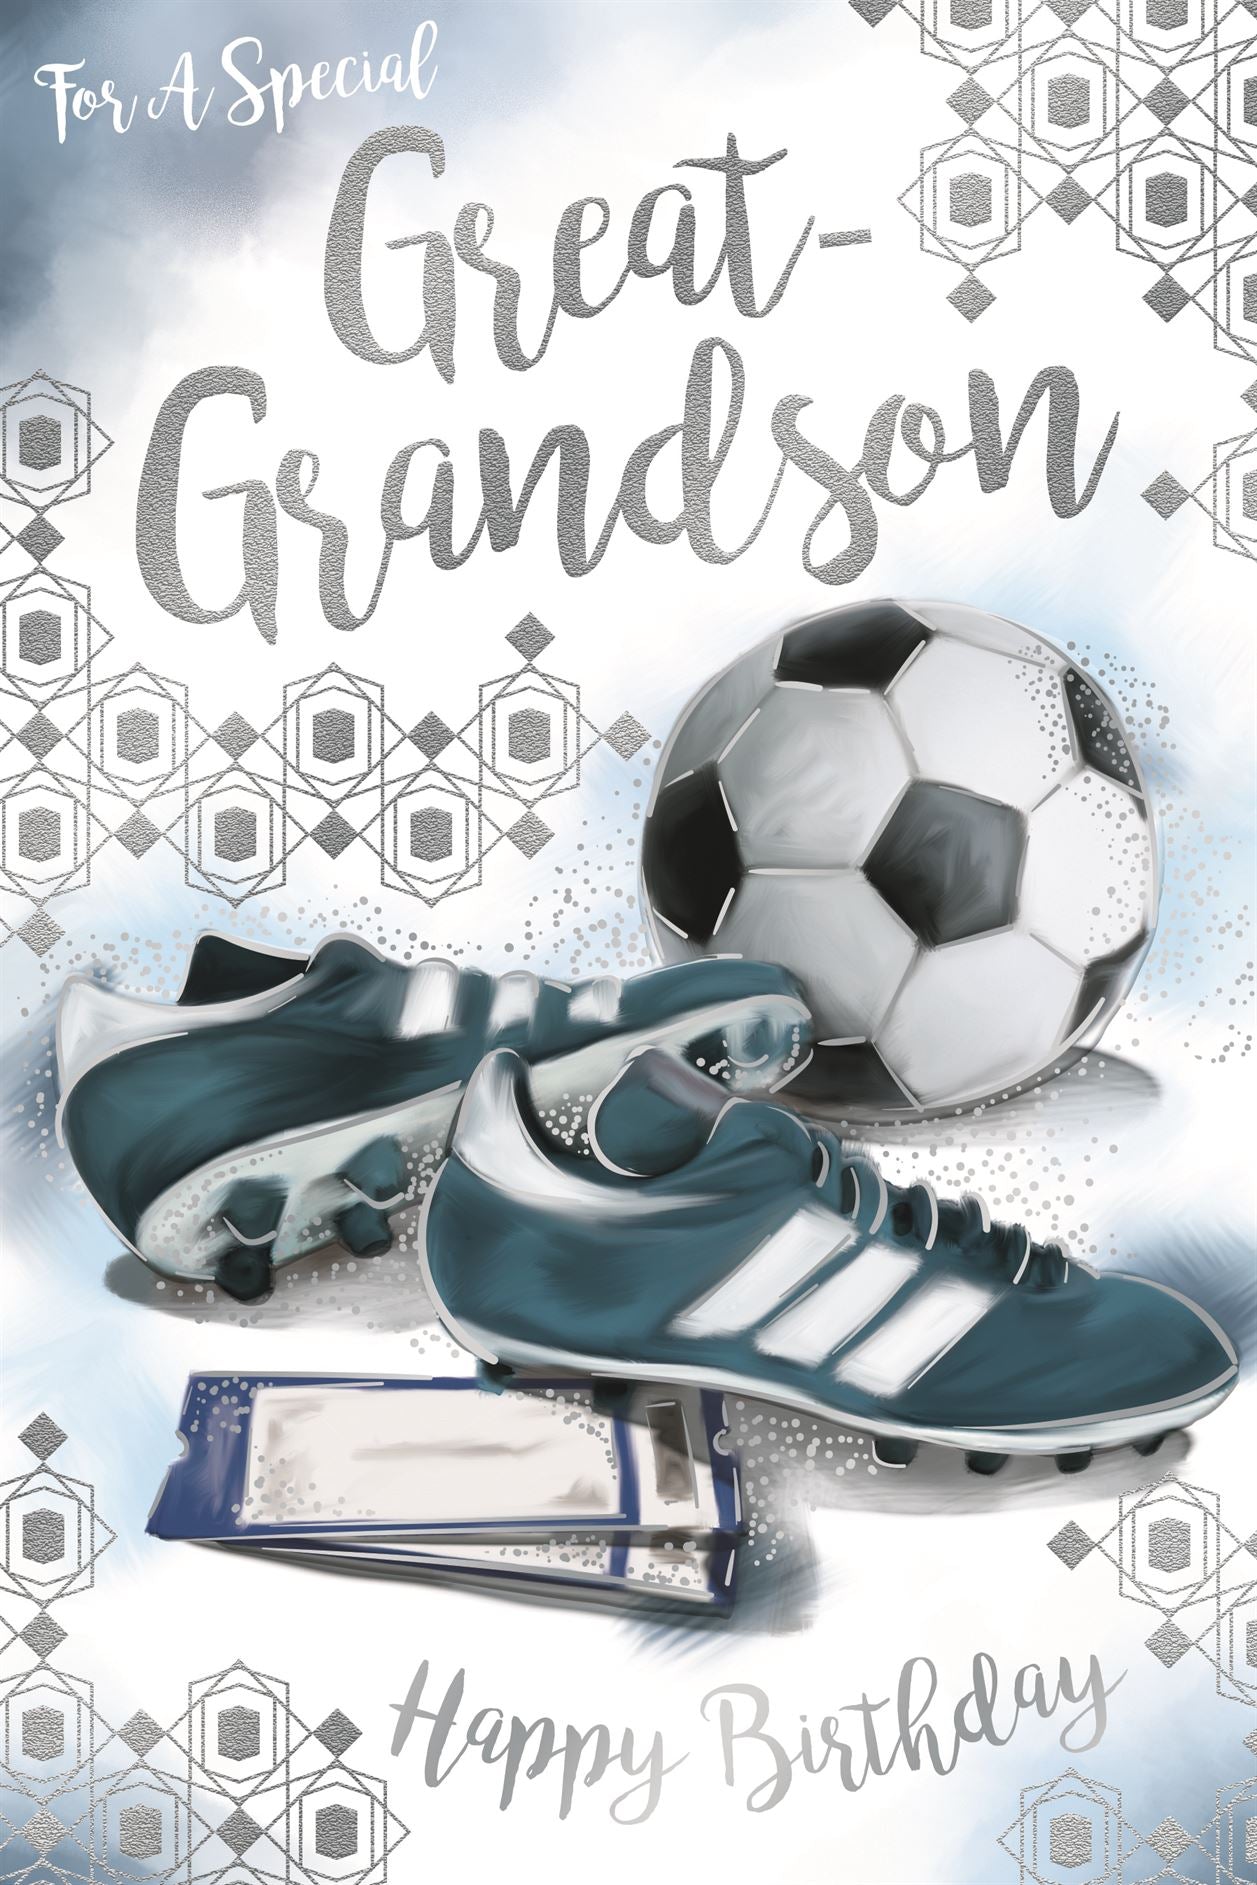 Great Grandson birthday card - football